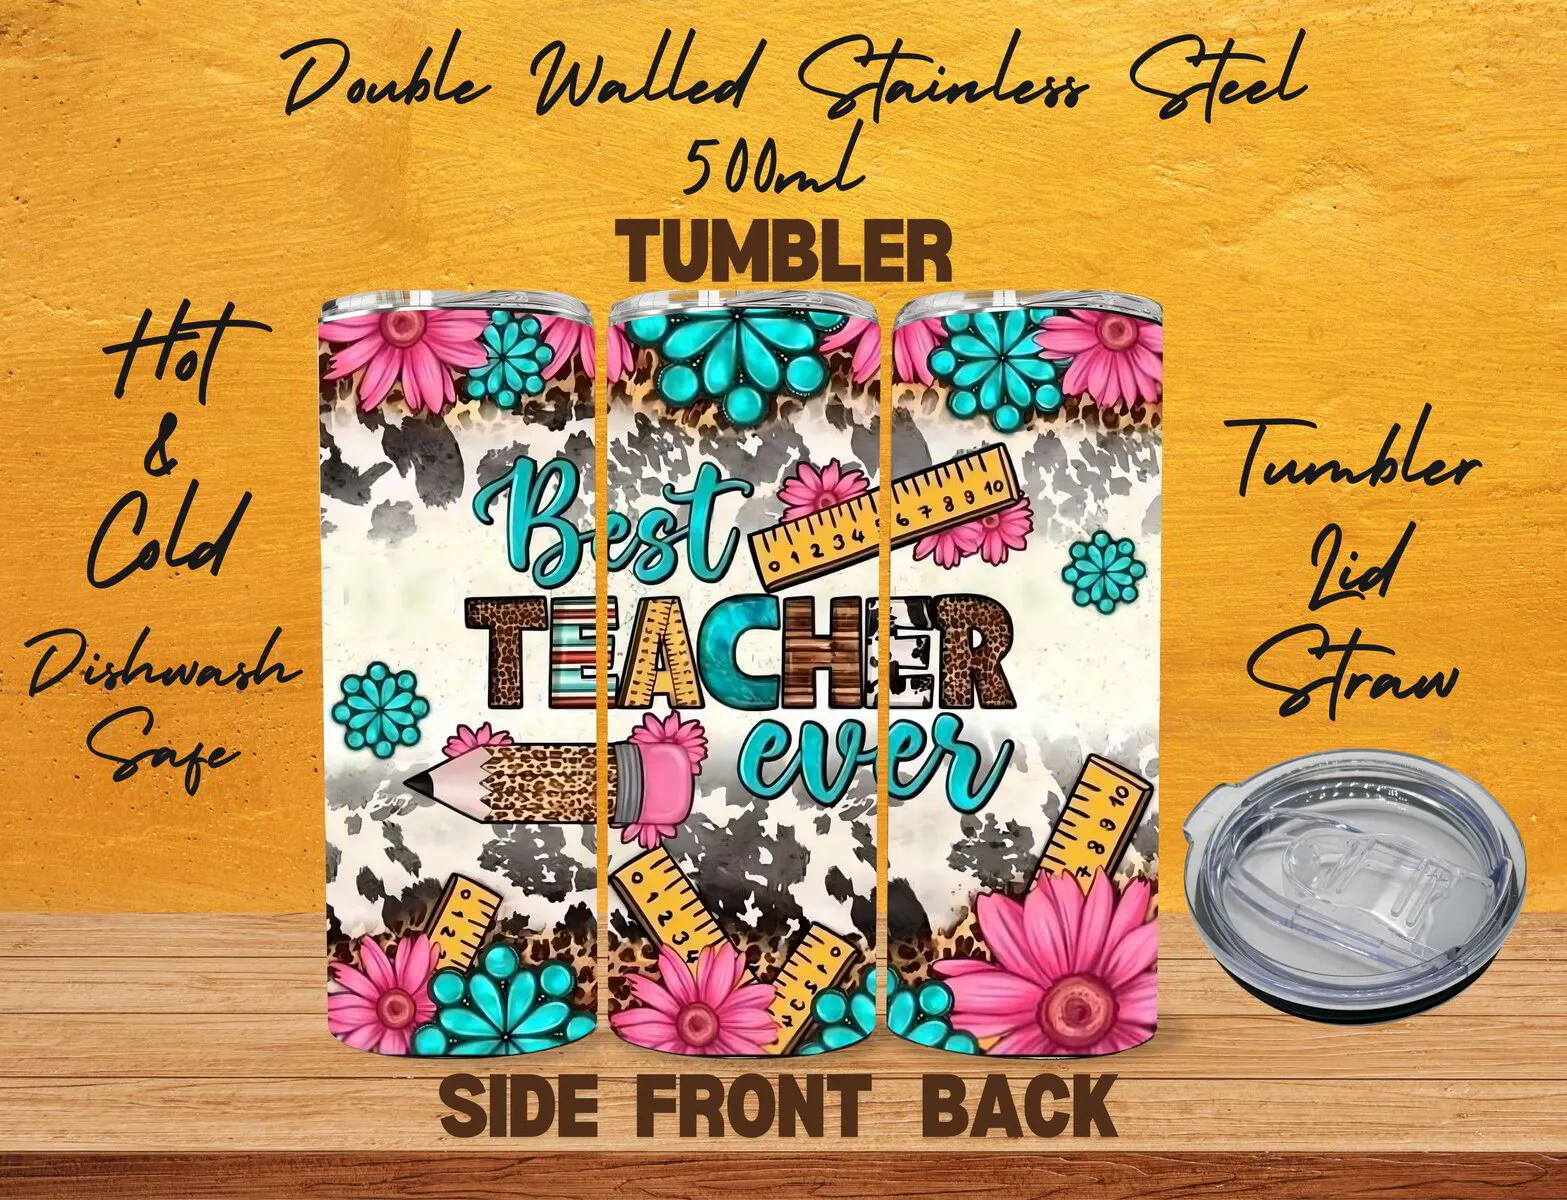 Teacher Tumbler - 500ml